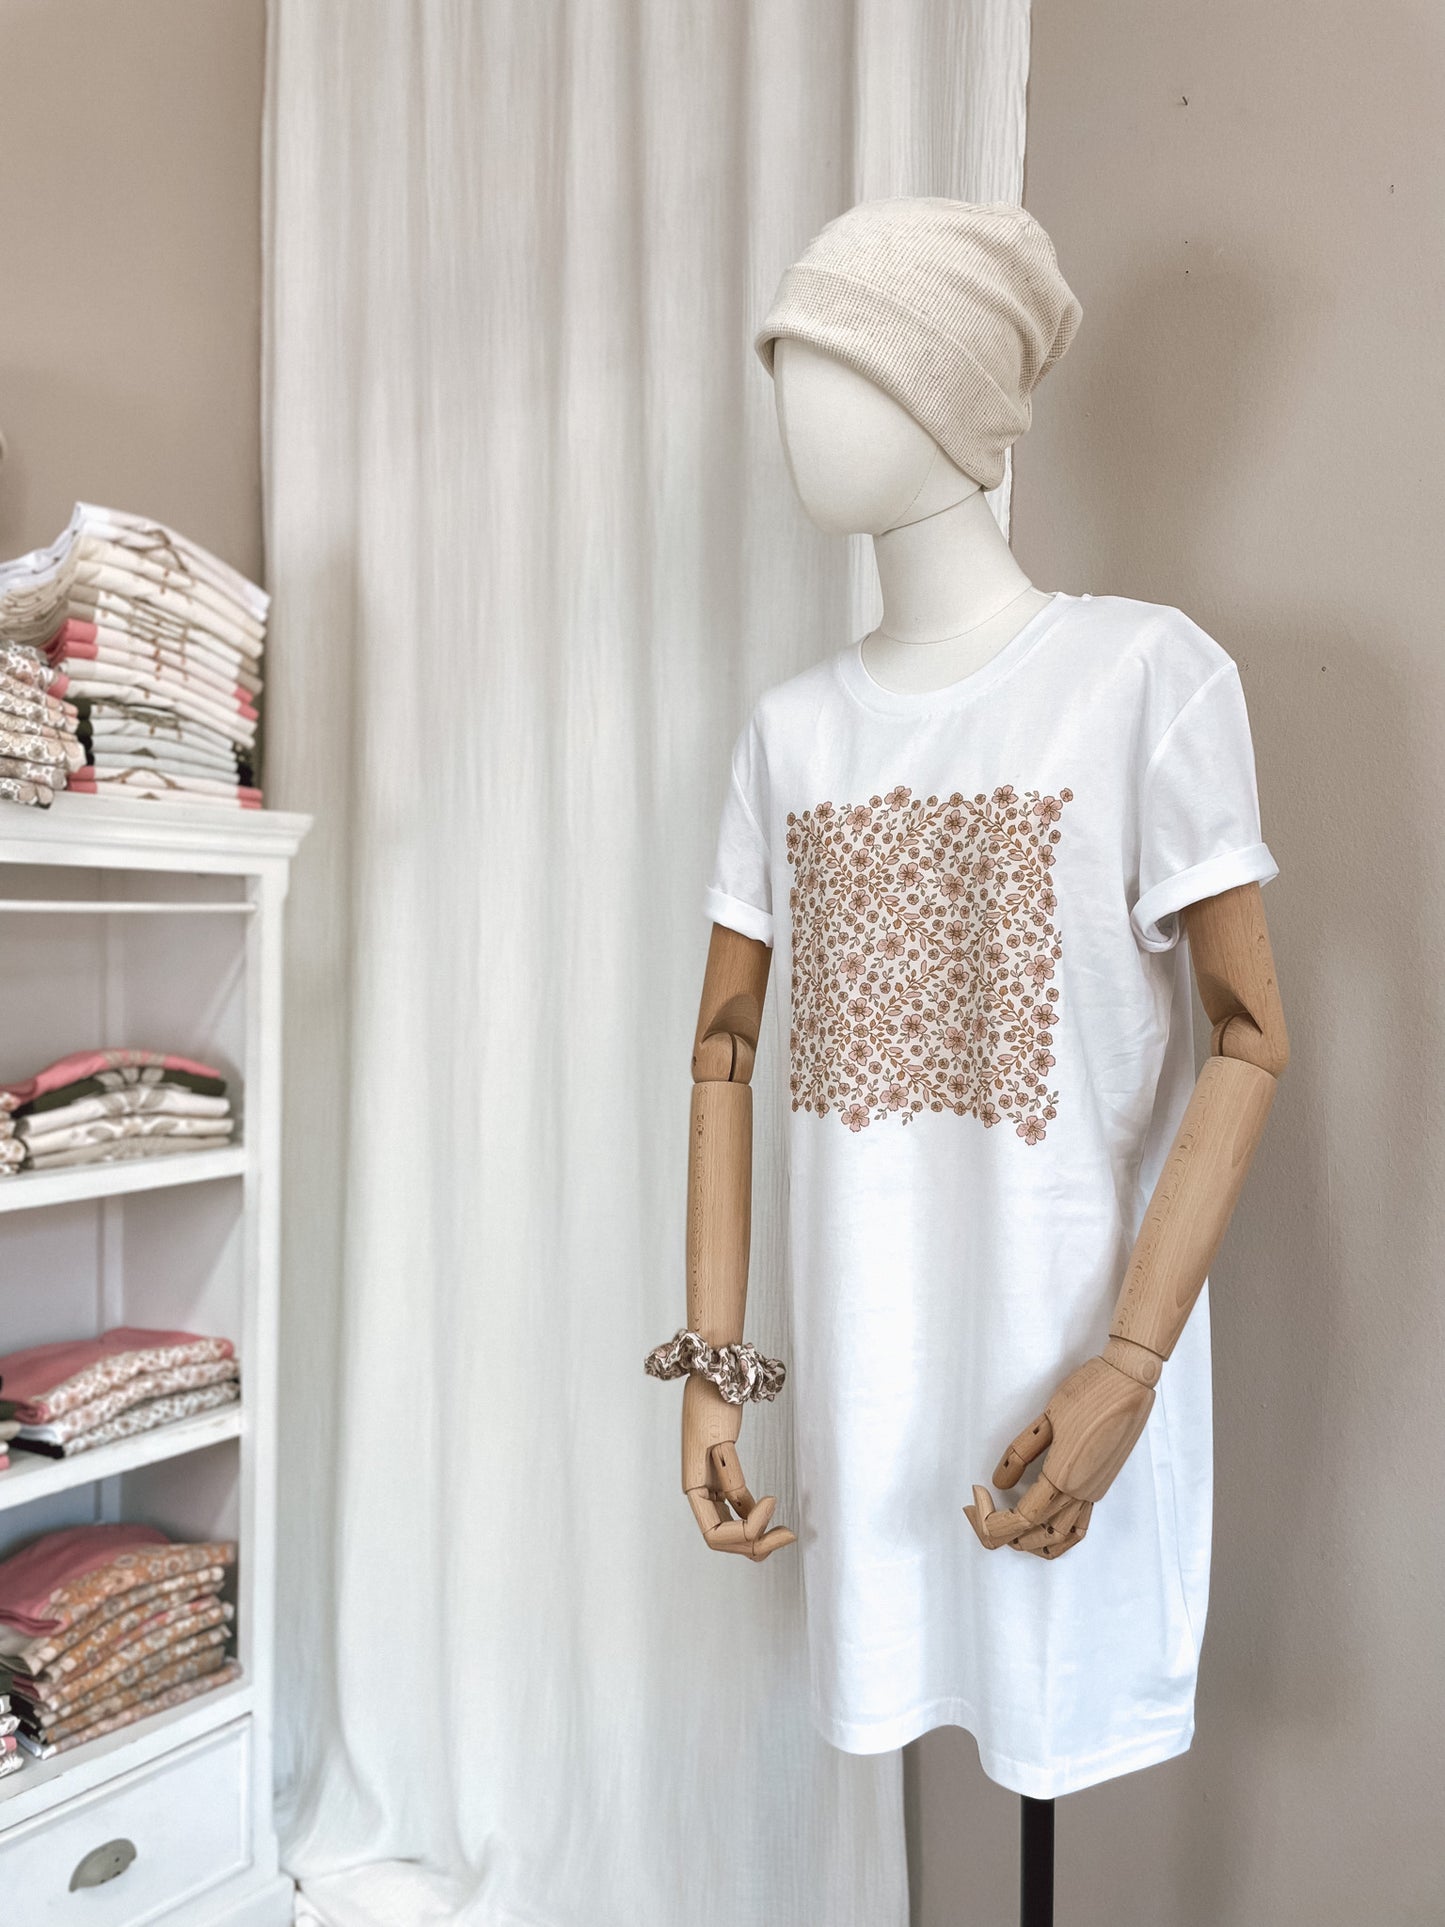 T-shirt dress / floral garland / white